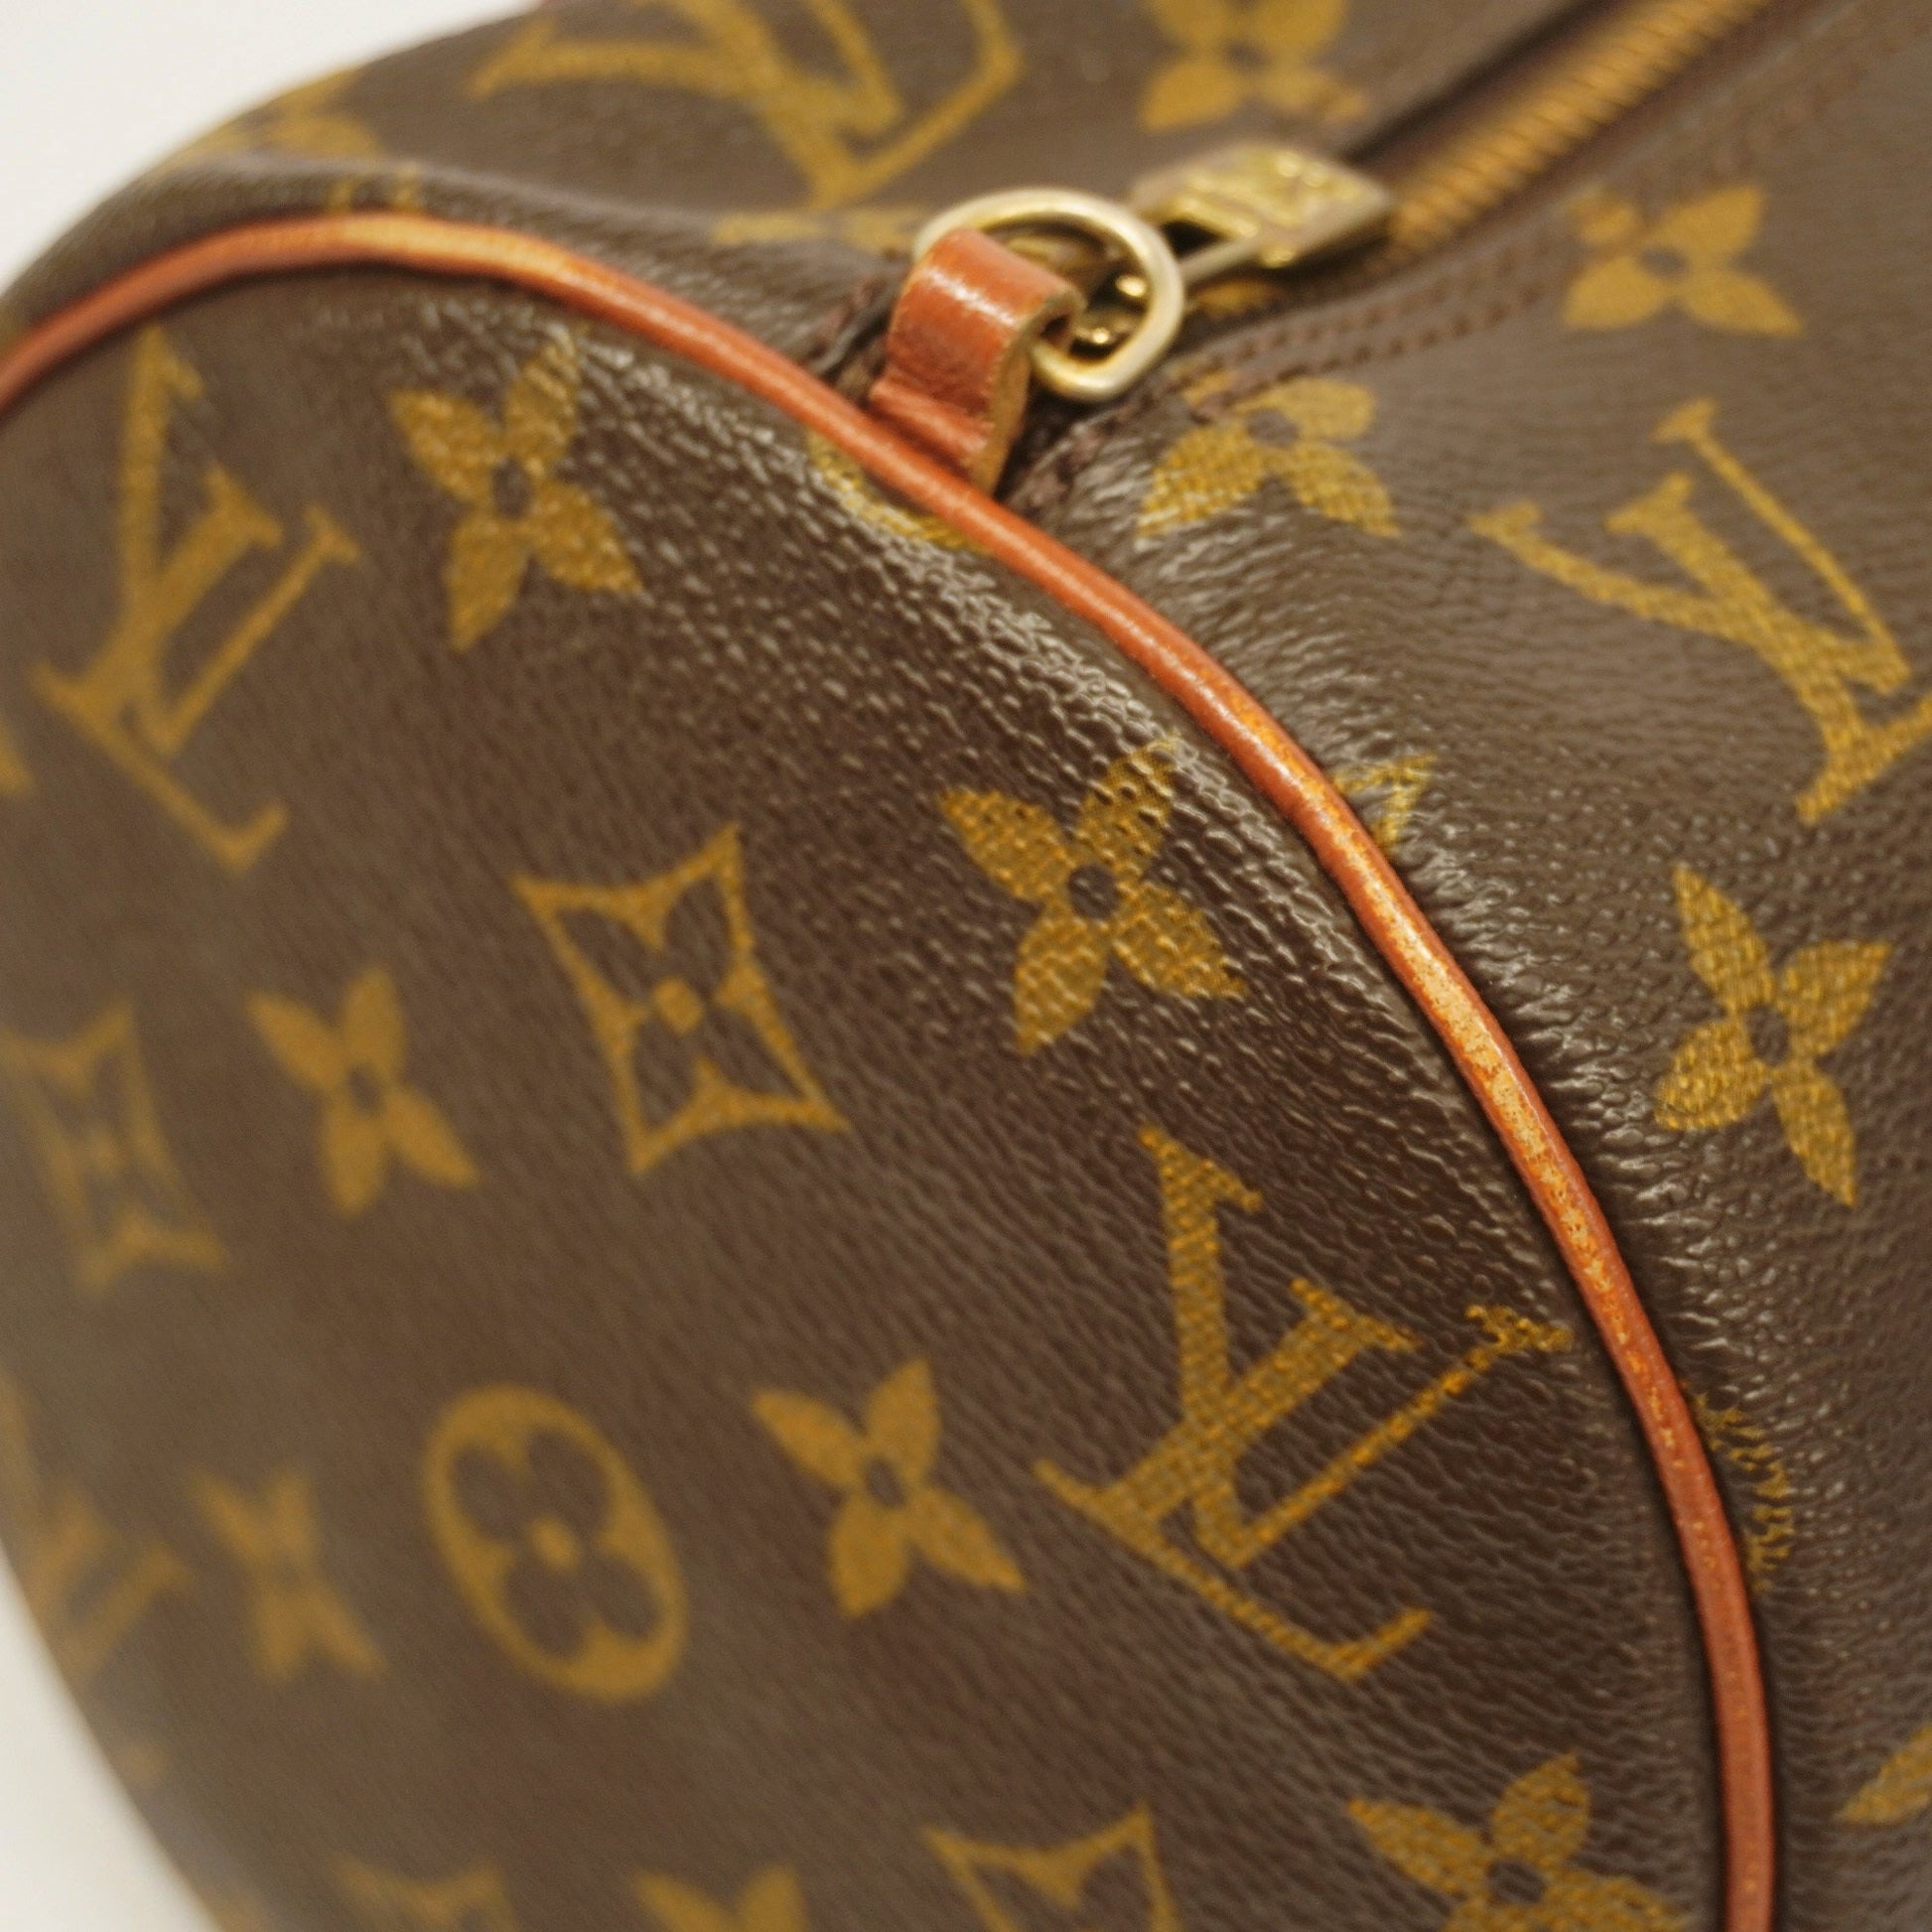 Handbag Louis Vuitton Papillon 30 Monogram M51385 123070036